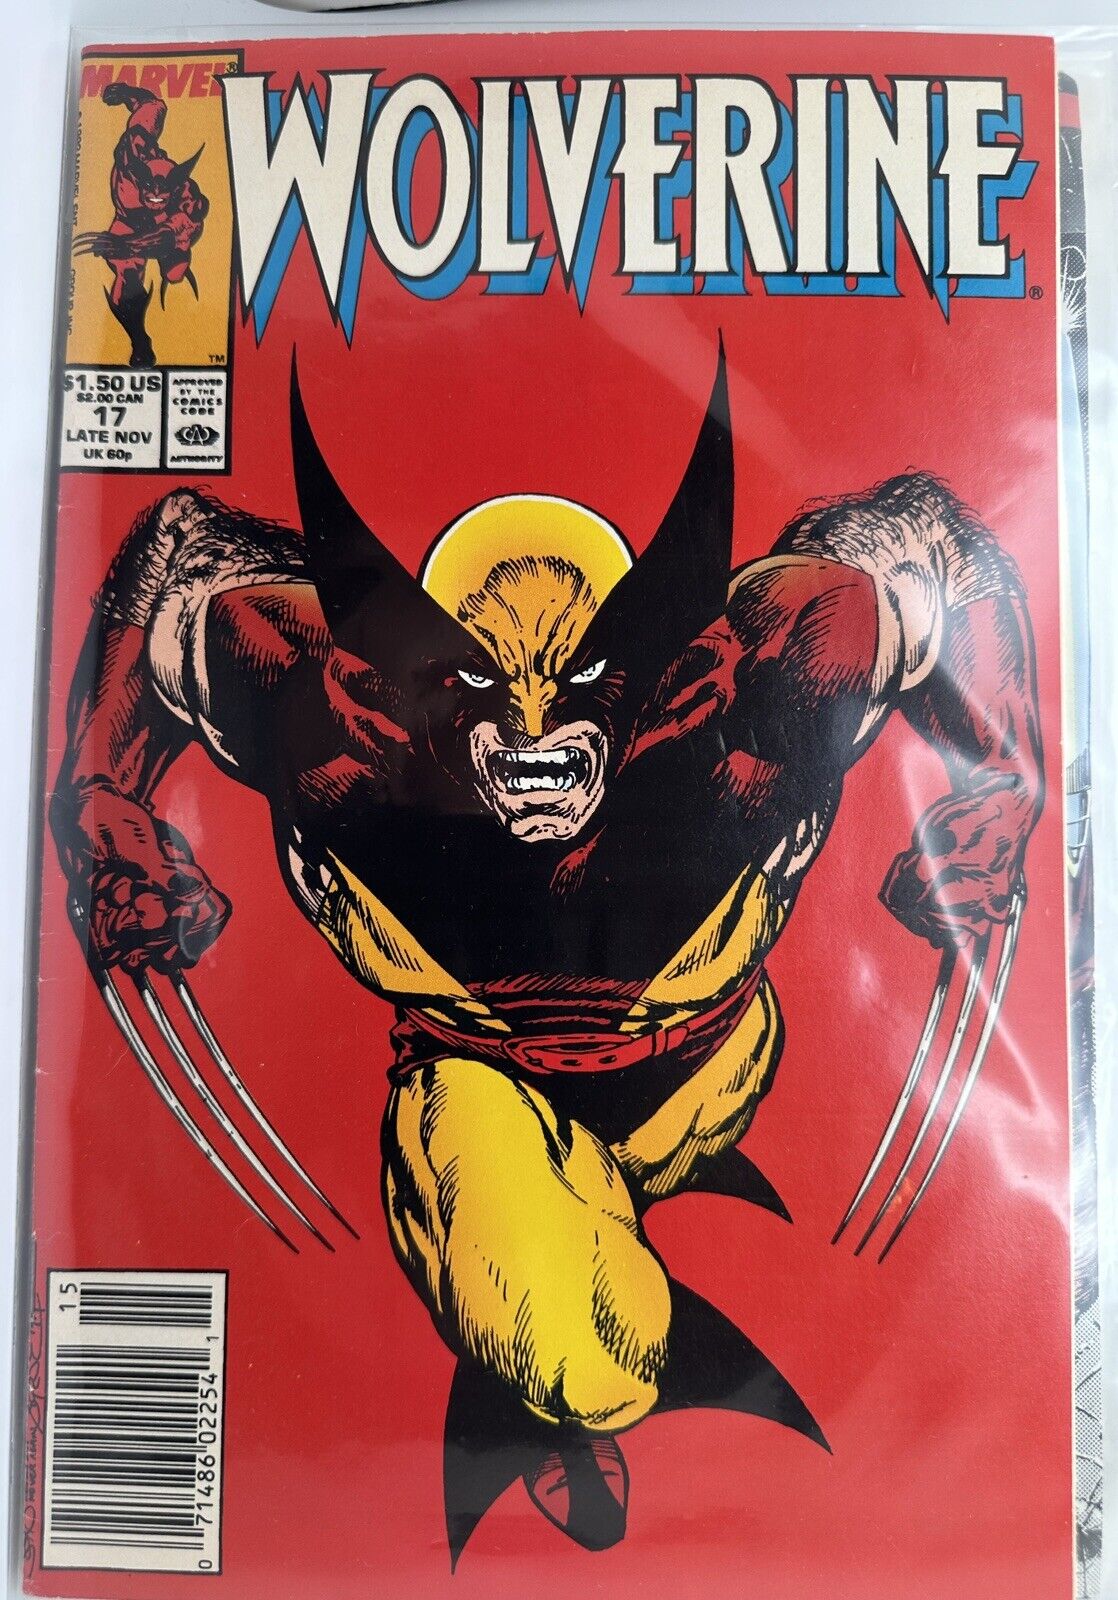 WOLVERINE #17 - MARVEL COMICS - 1989